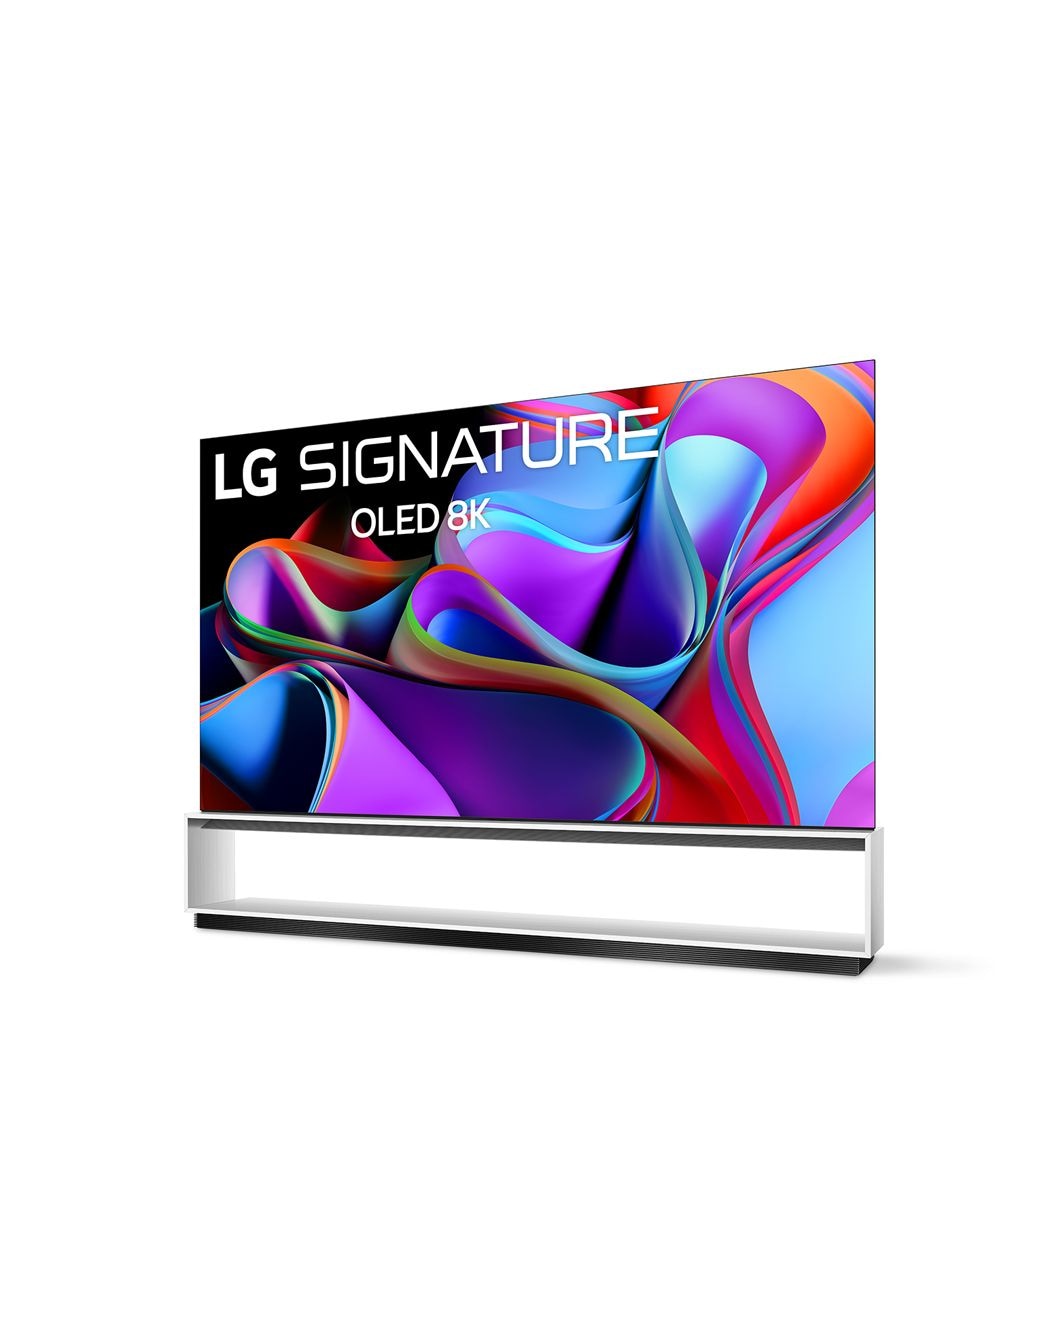 LG SIGNATURE TVs